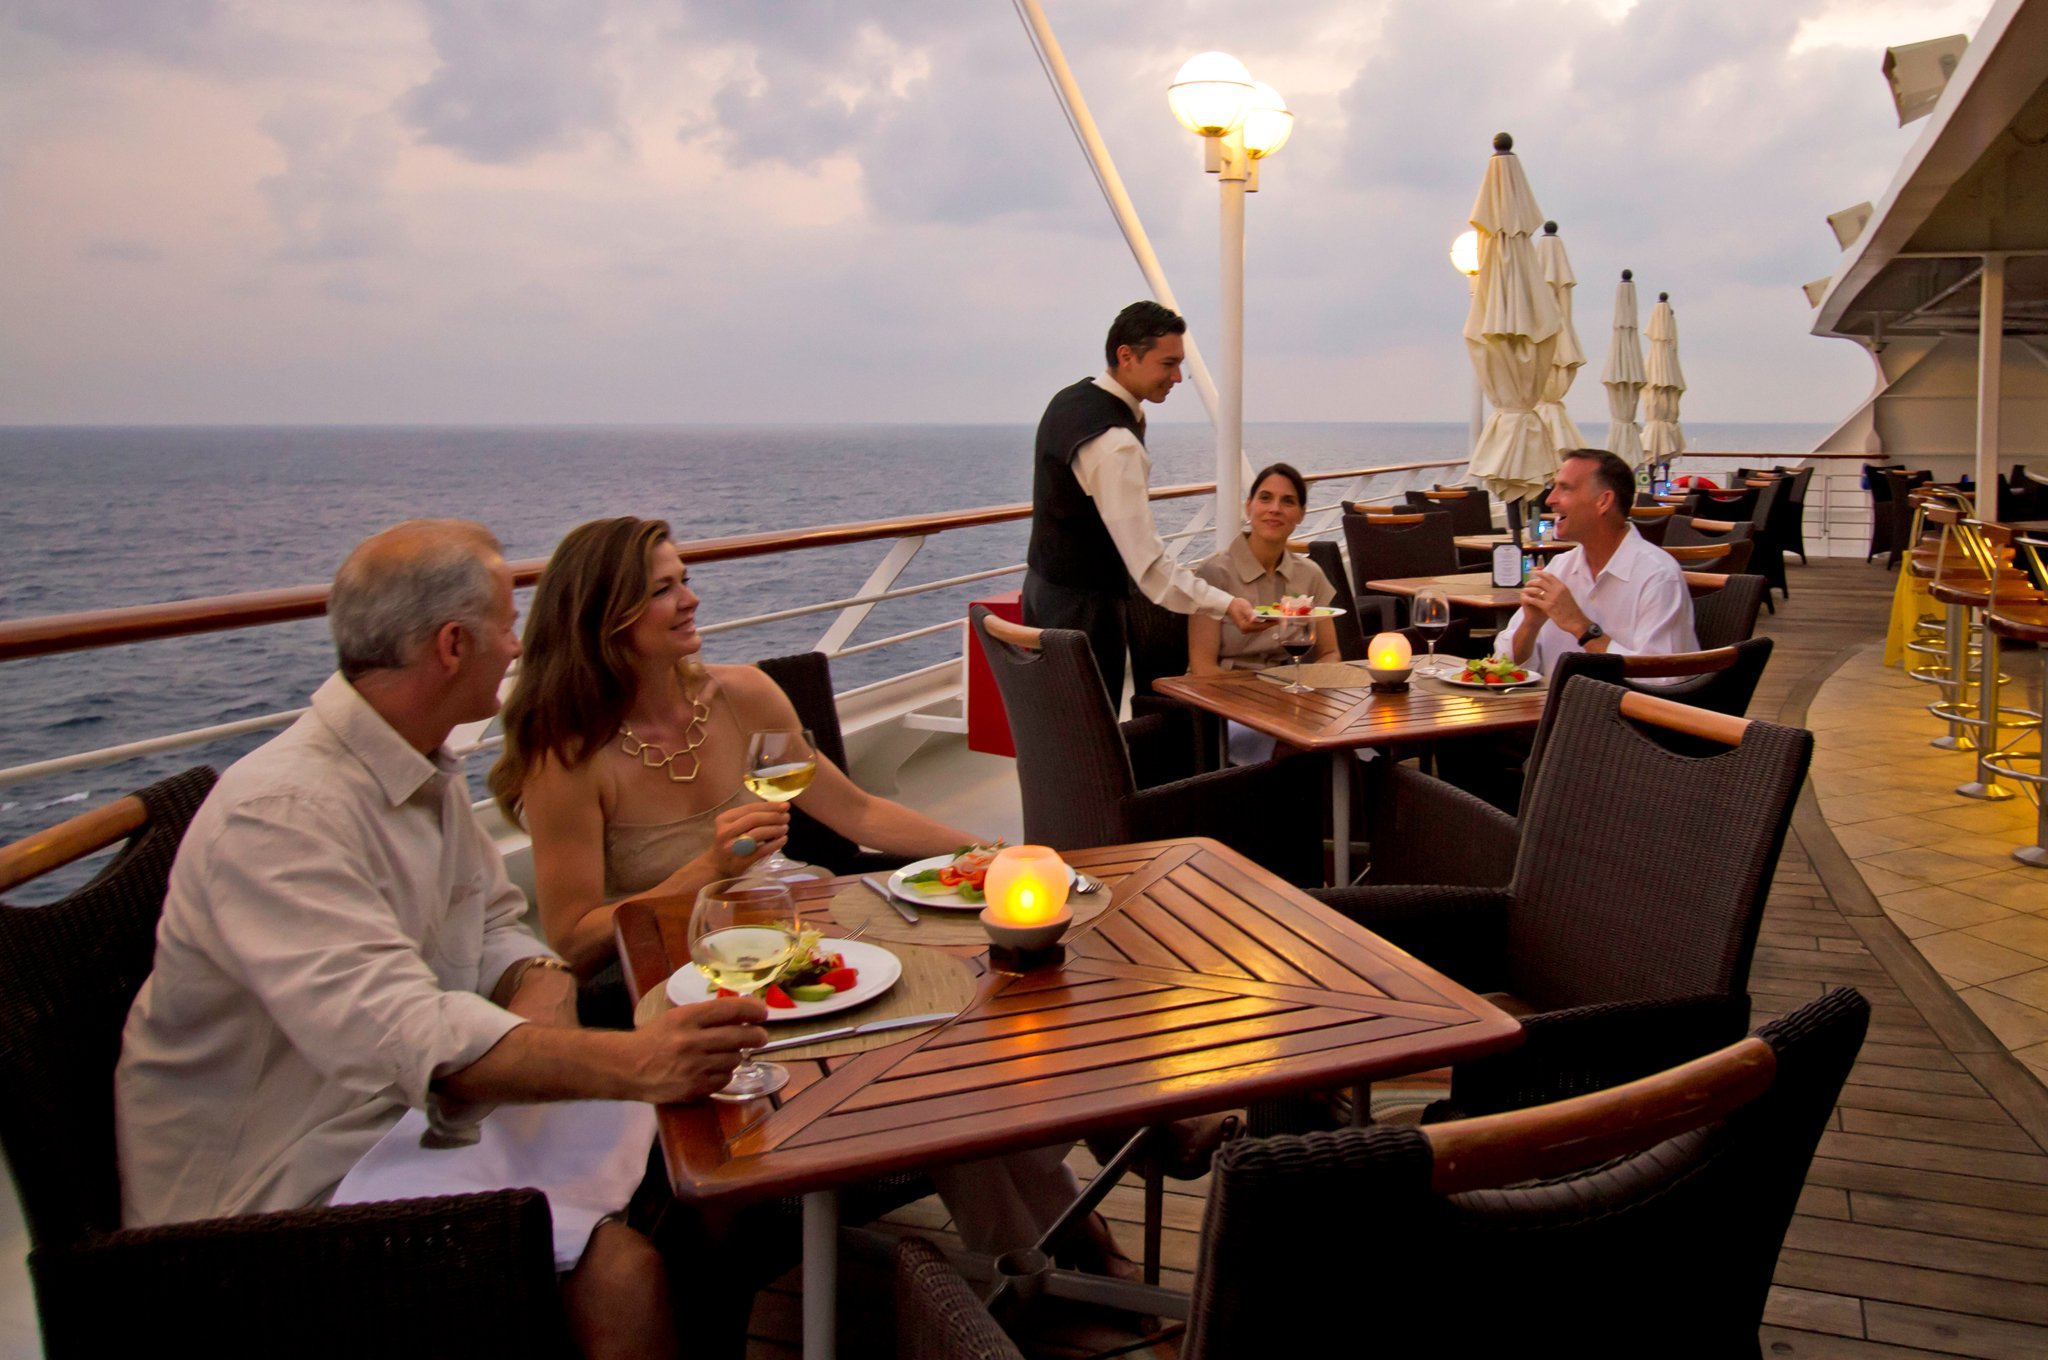 На палубе вечером. Ужин на круизном лайнере. Обед на корабле. Ресторан корабль. Ресторан на лайнере.